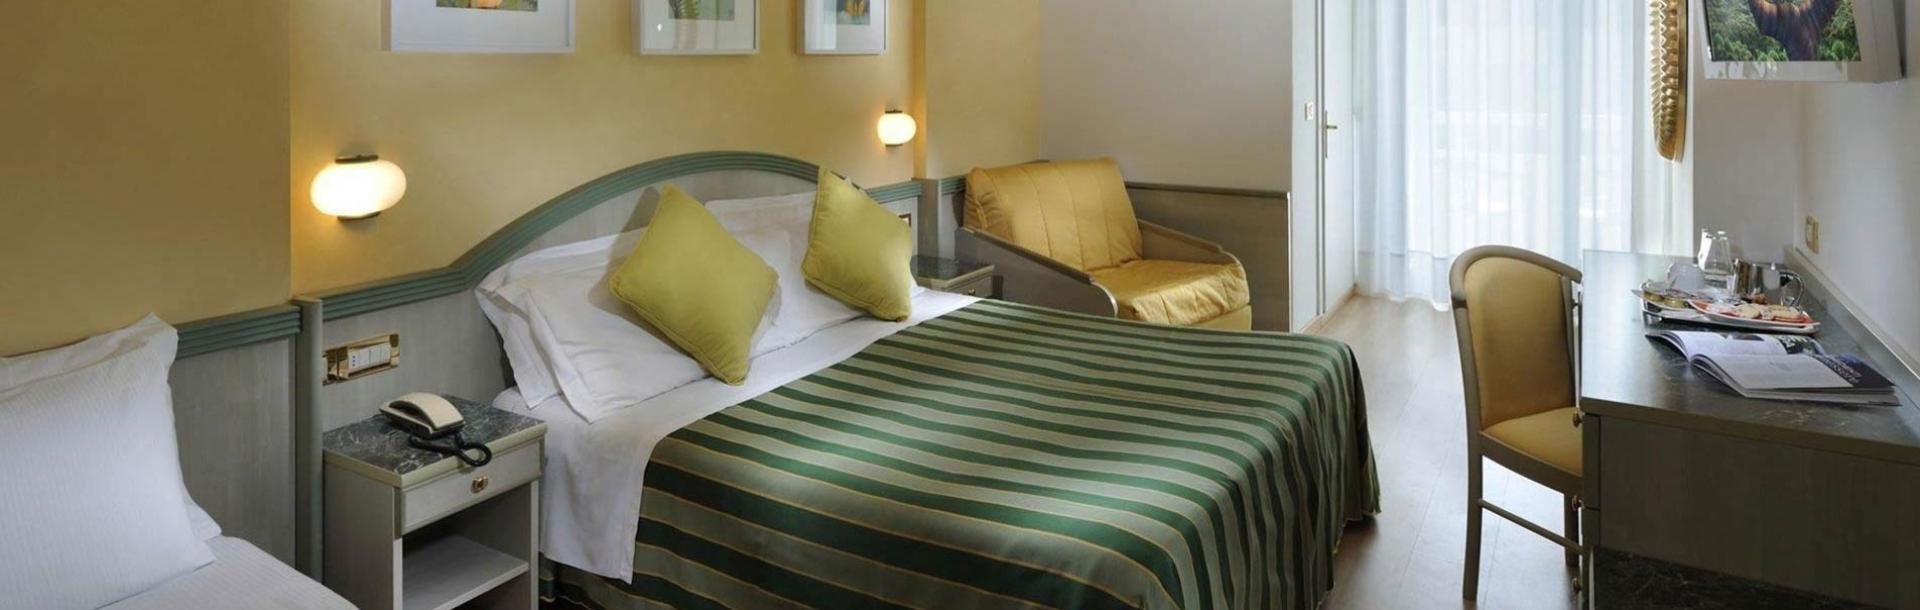 hotel-montecarlo it camera-rubino 012